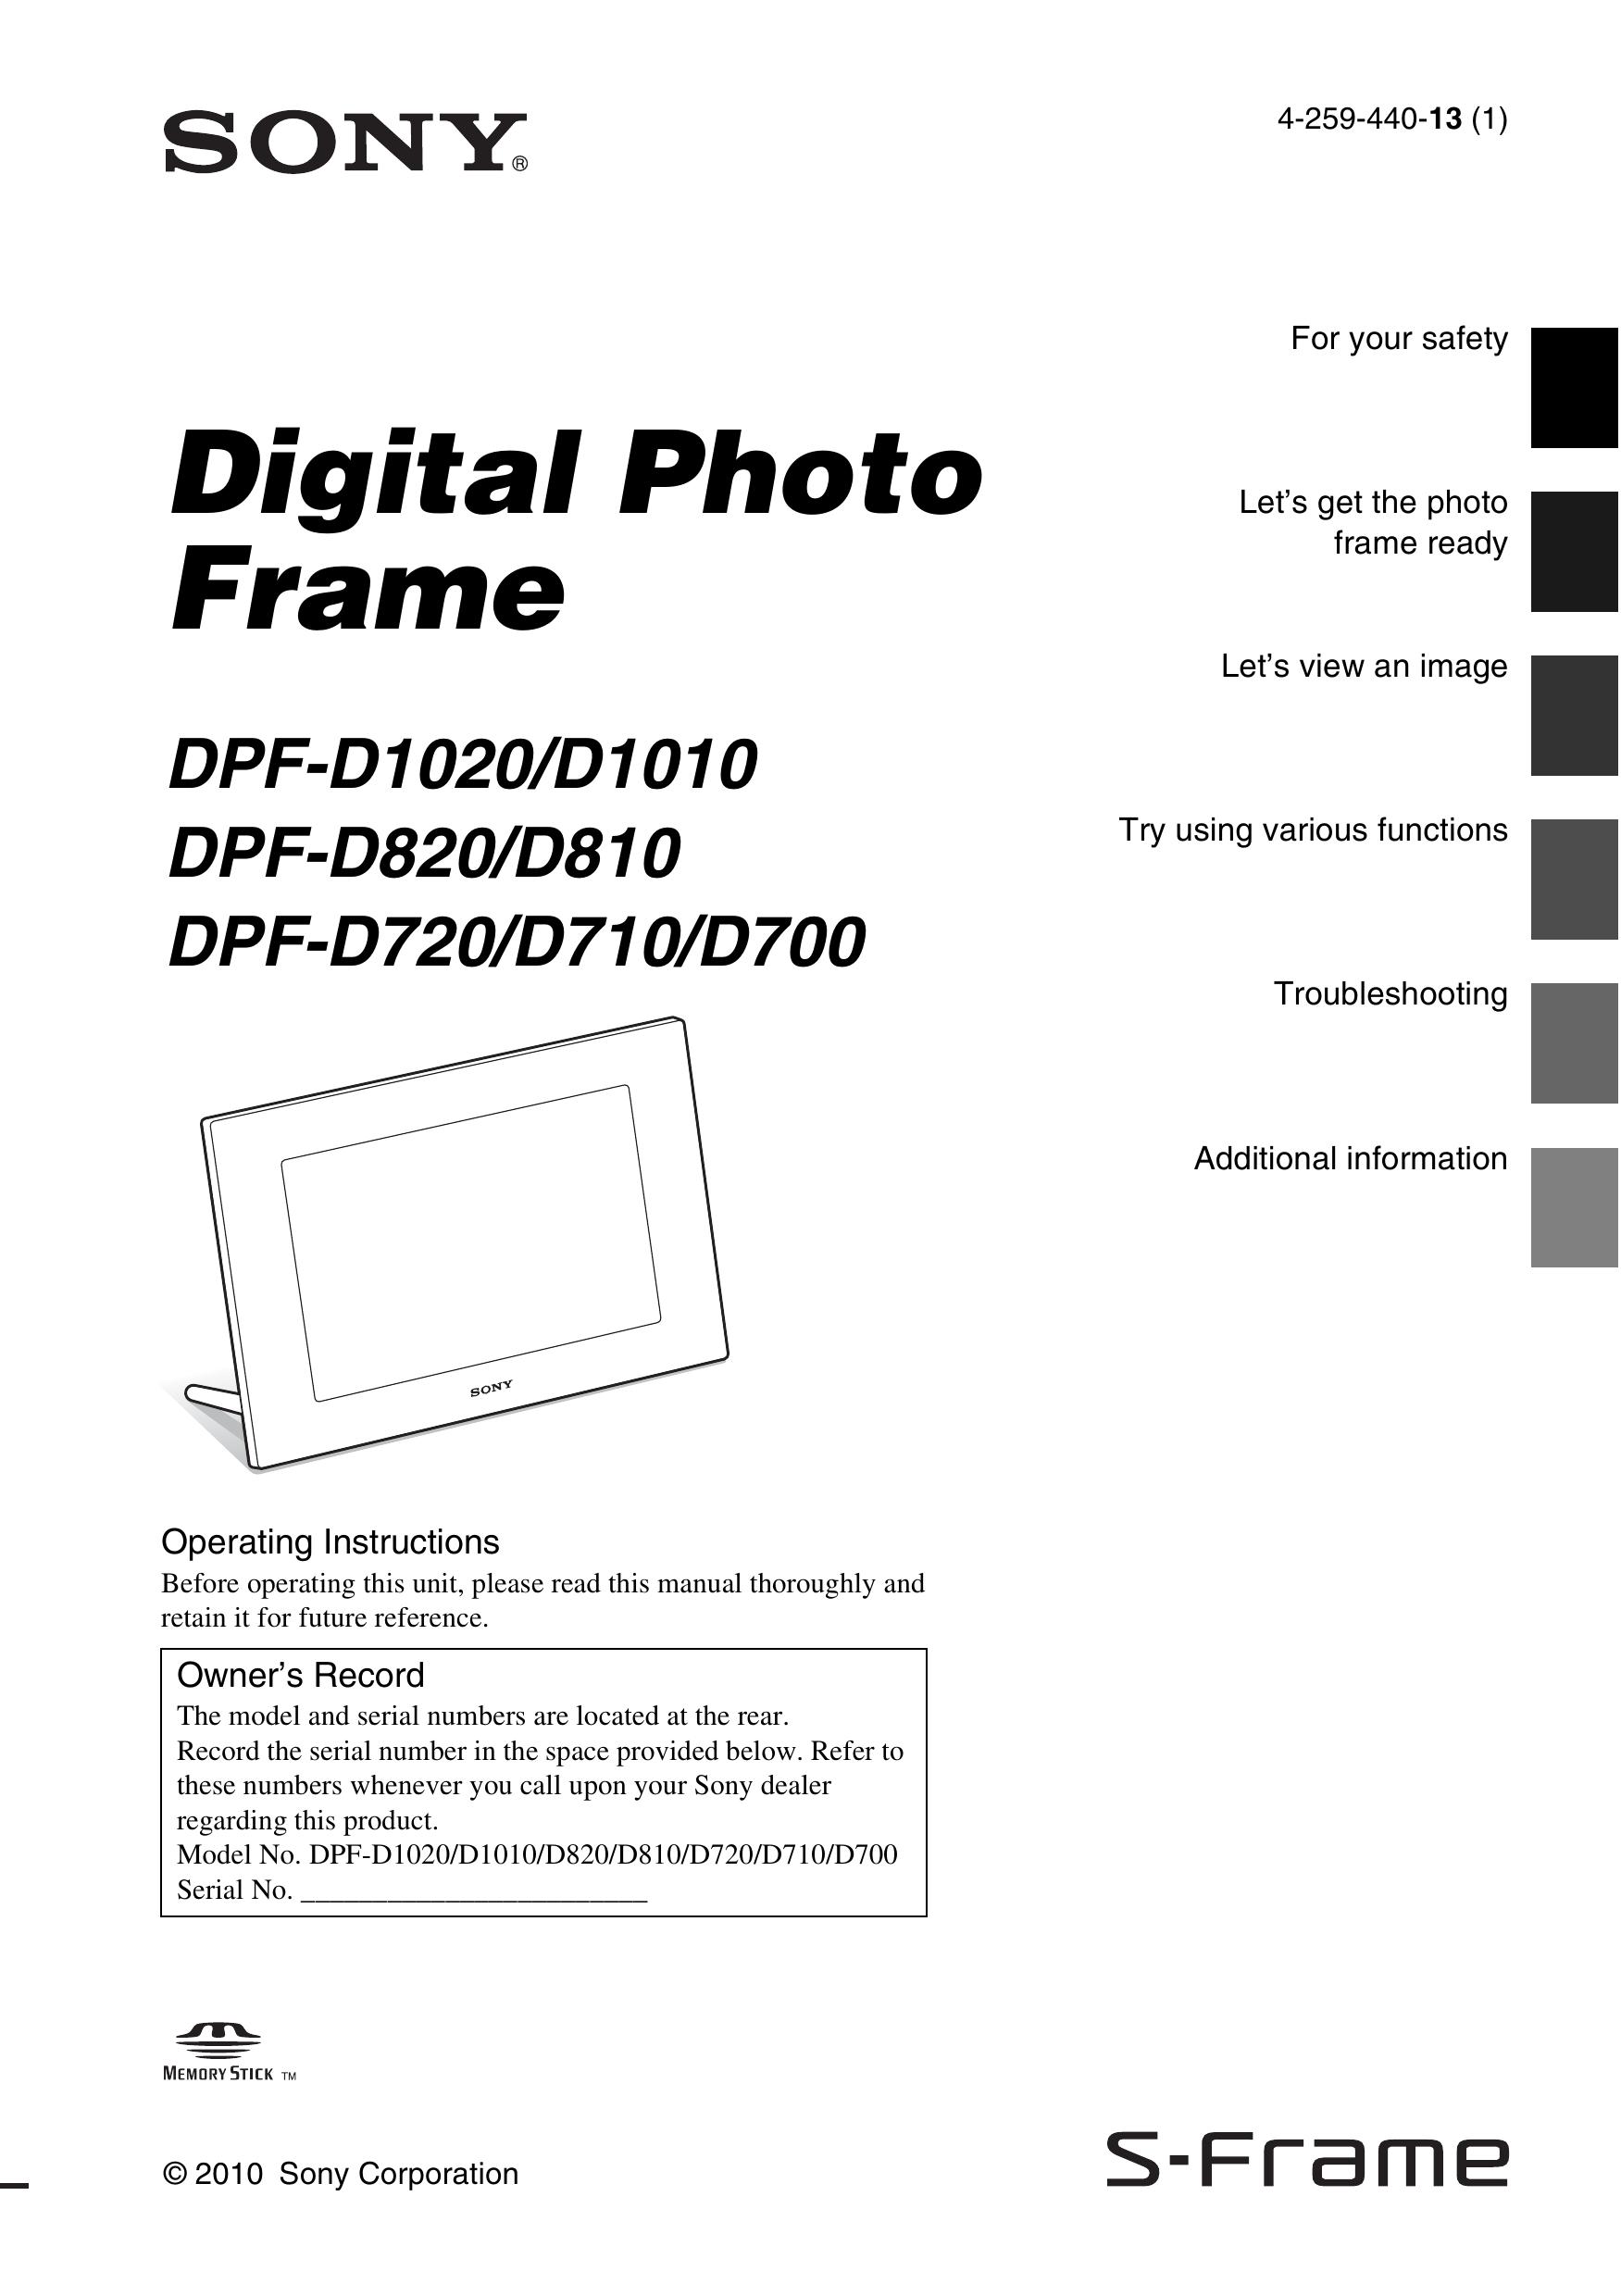 Sony DPFD700 Digital Photo Frame User Manual